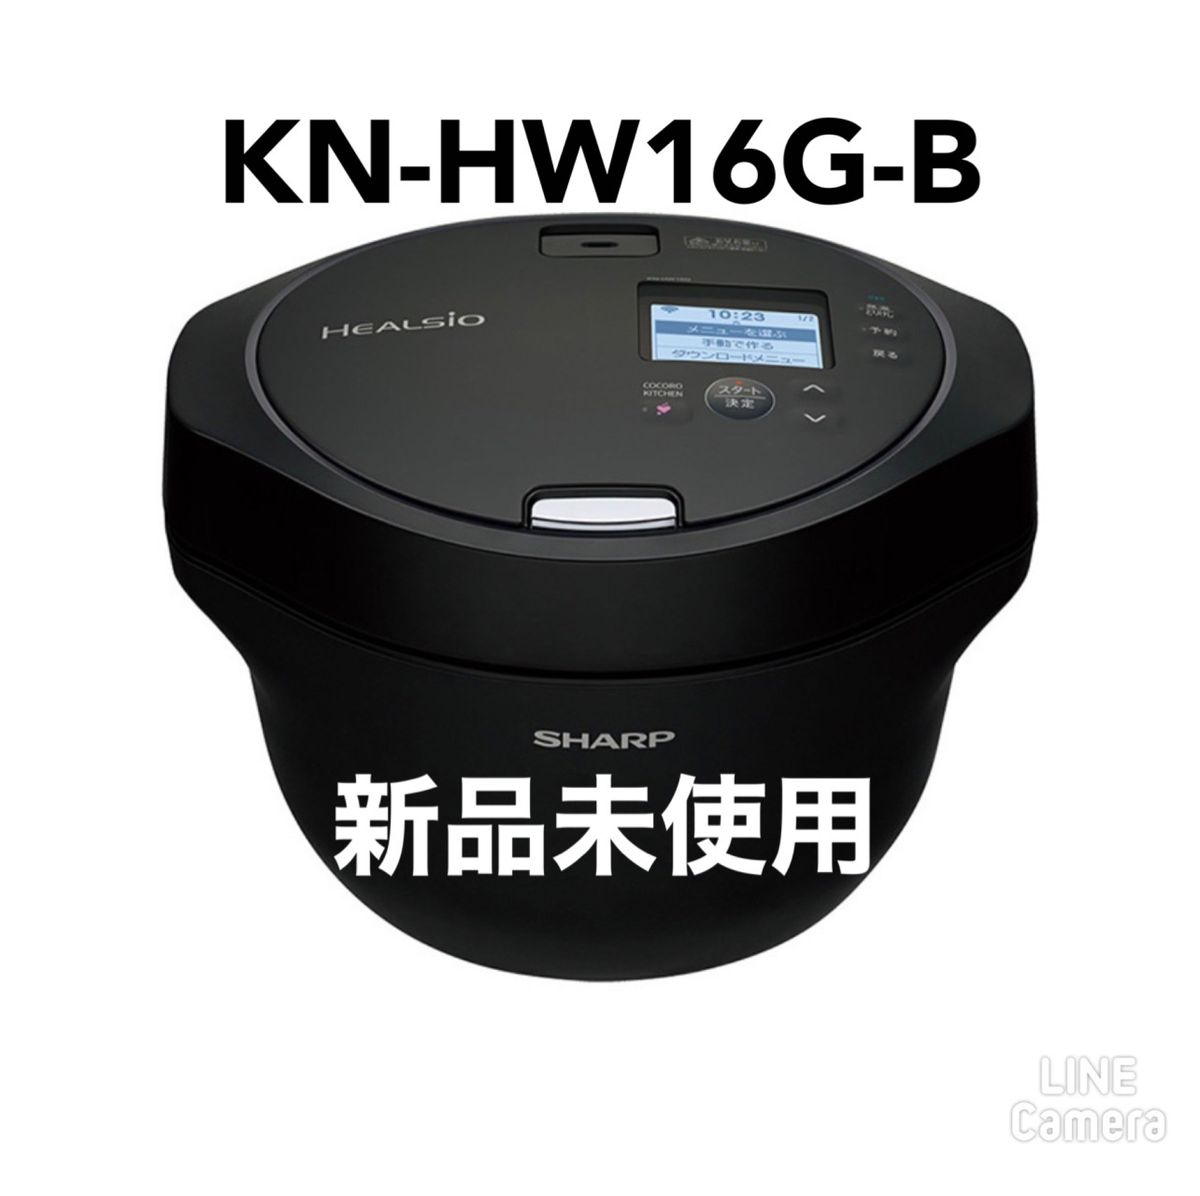 SHARP KN-HW16G-B BLACK - キッチン家電